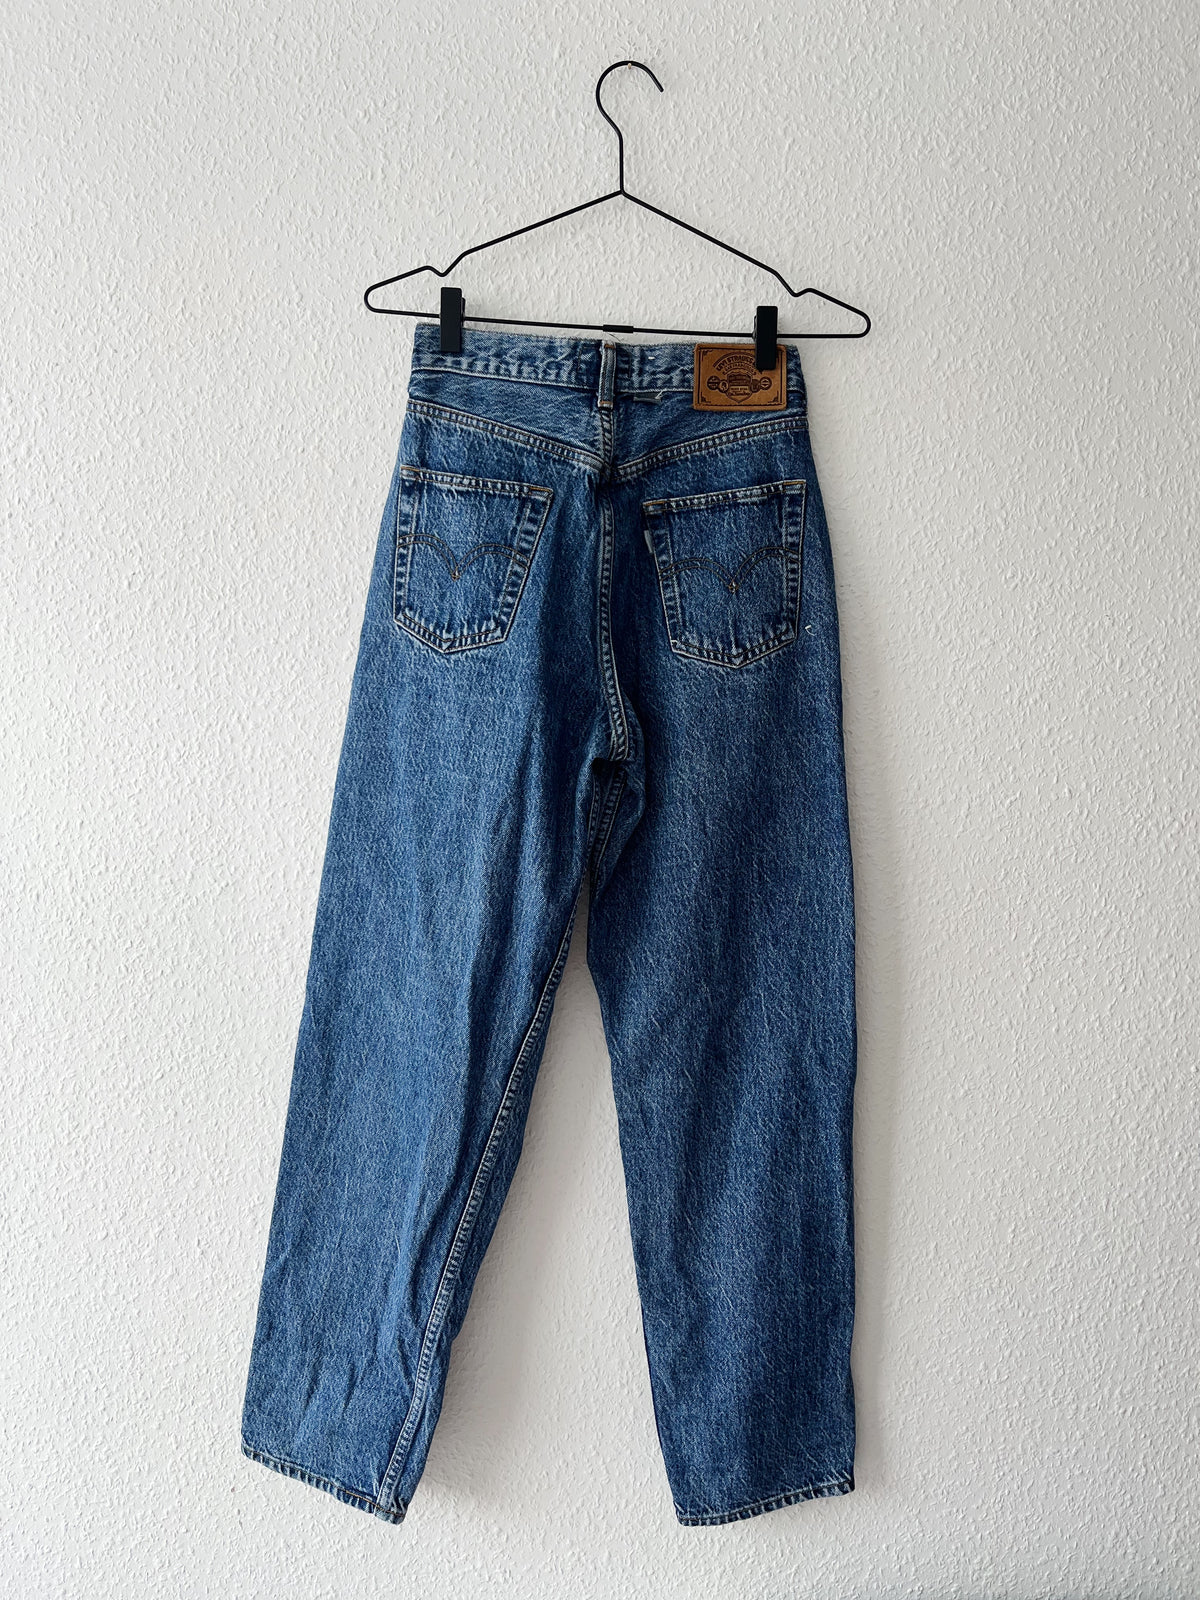 Vintage Mom jeans